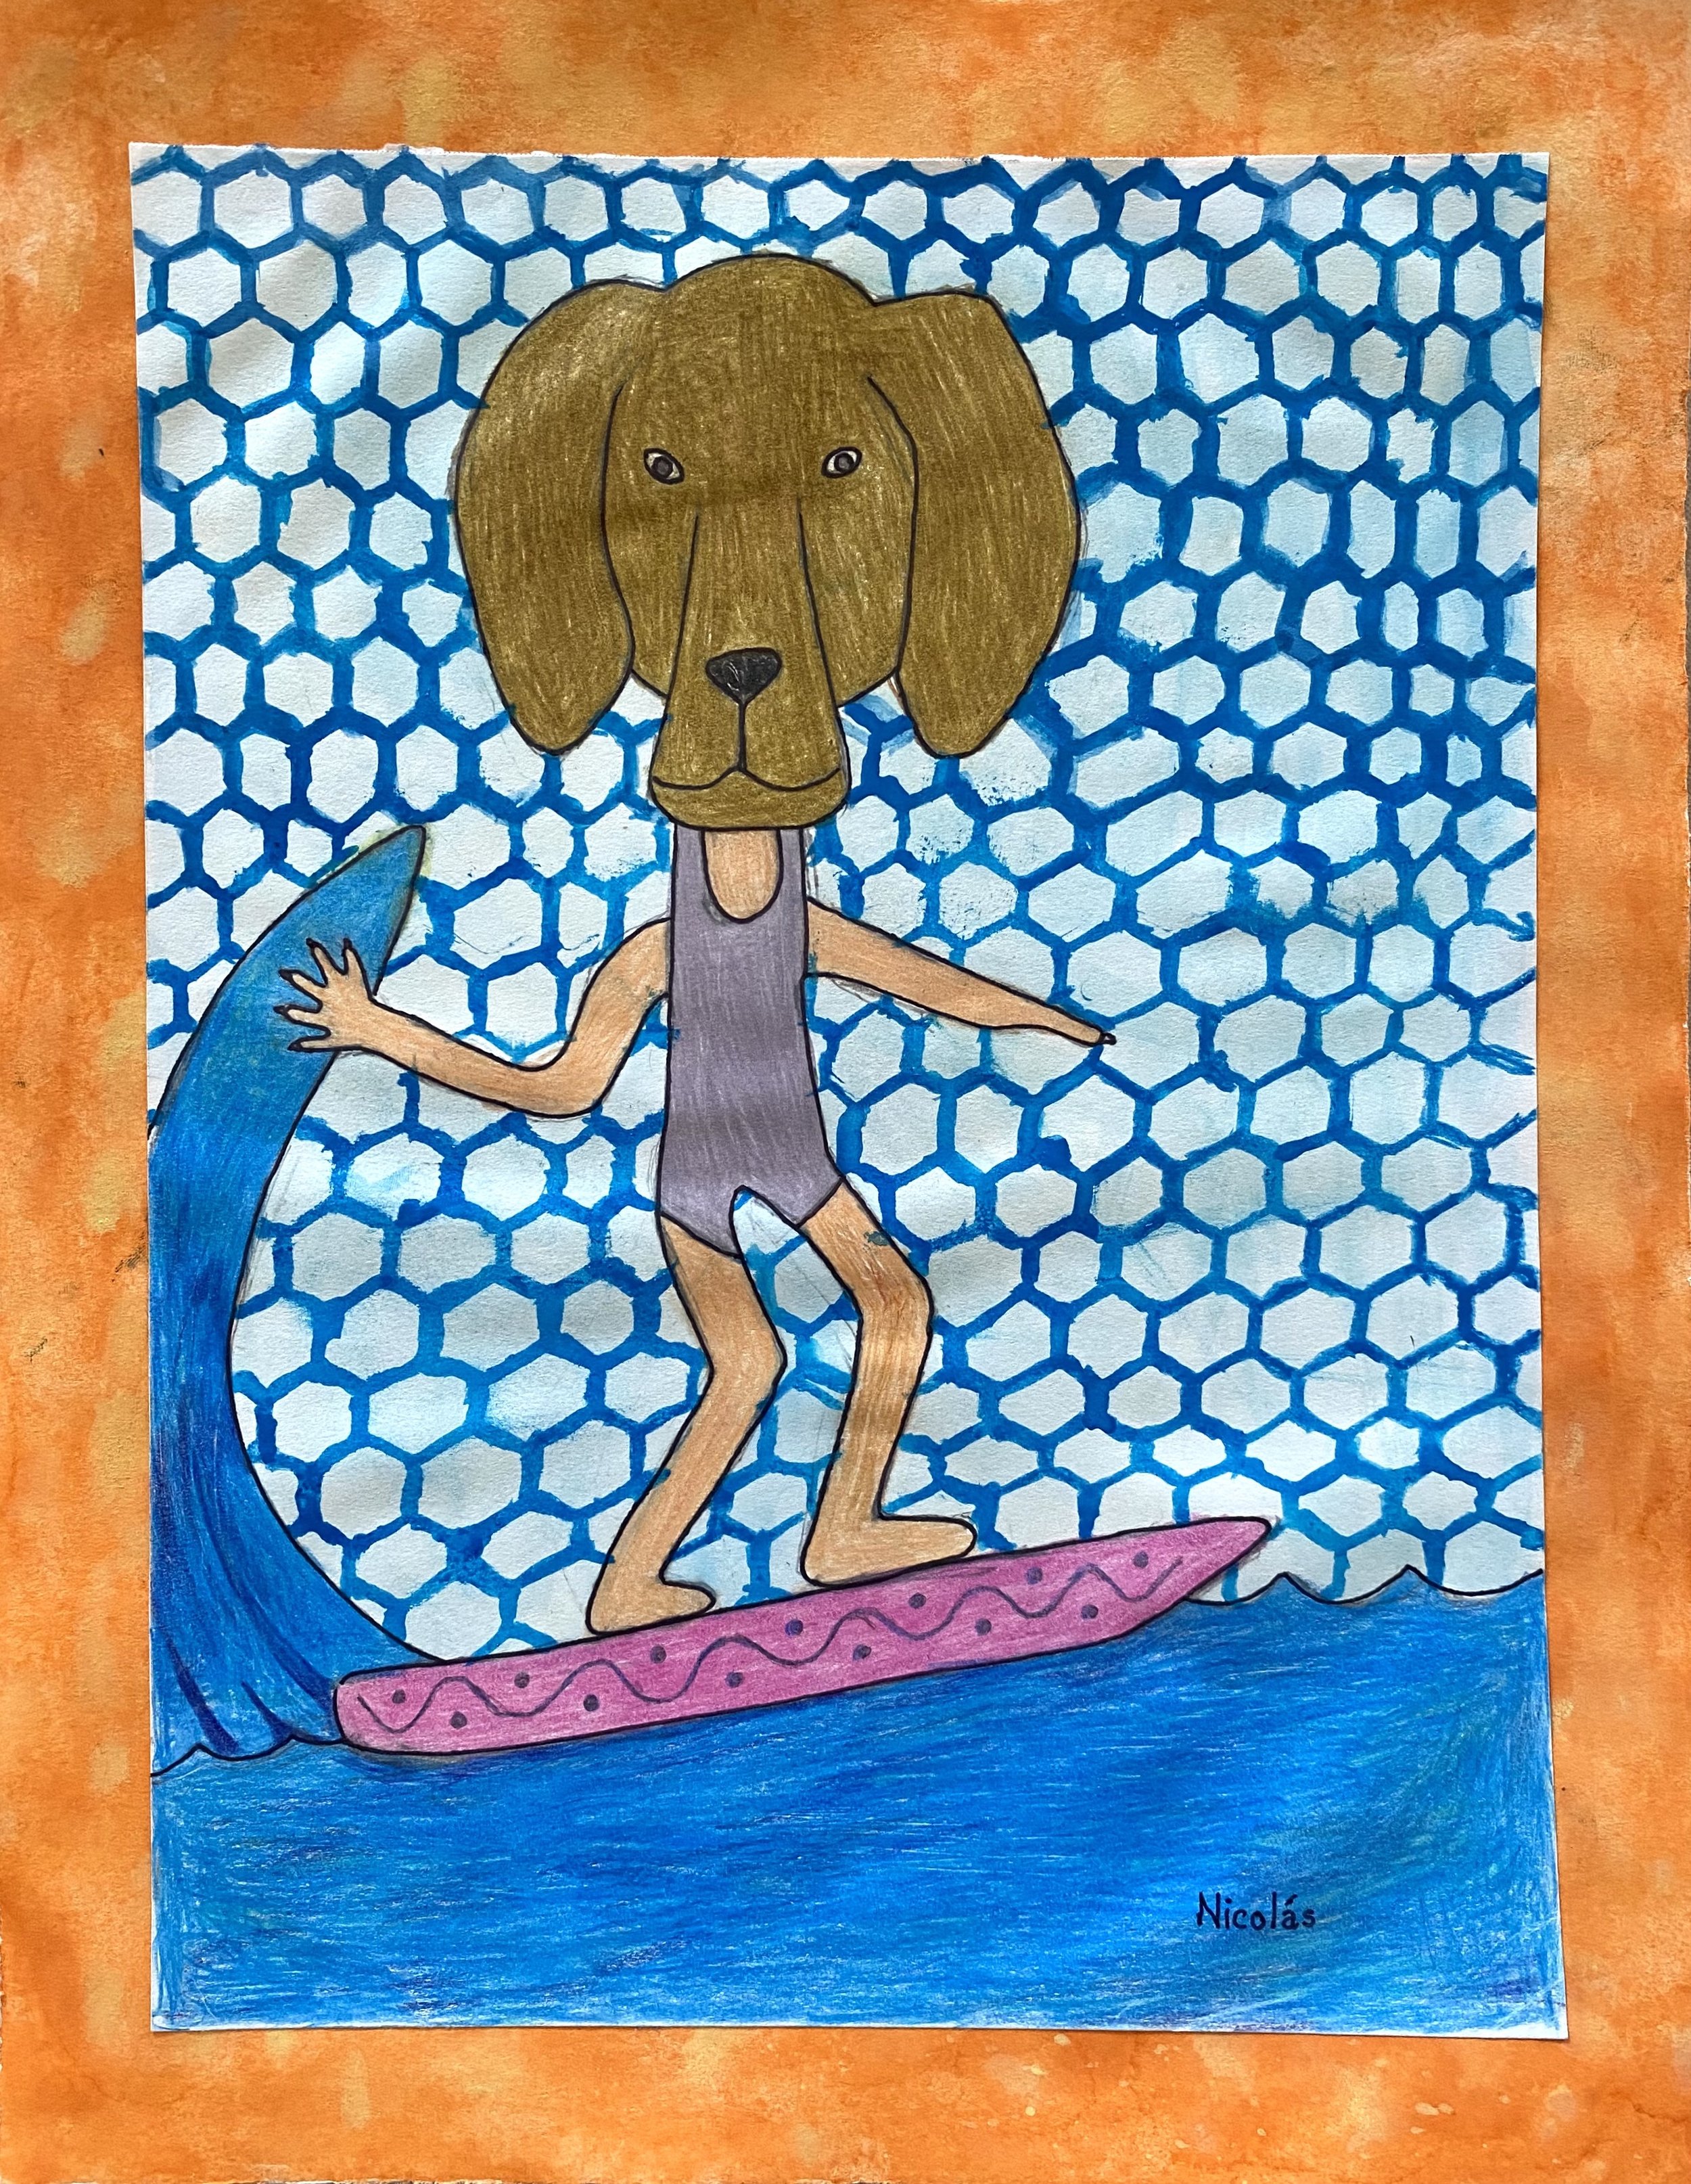 Human Dog and Surfboard, 2022